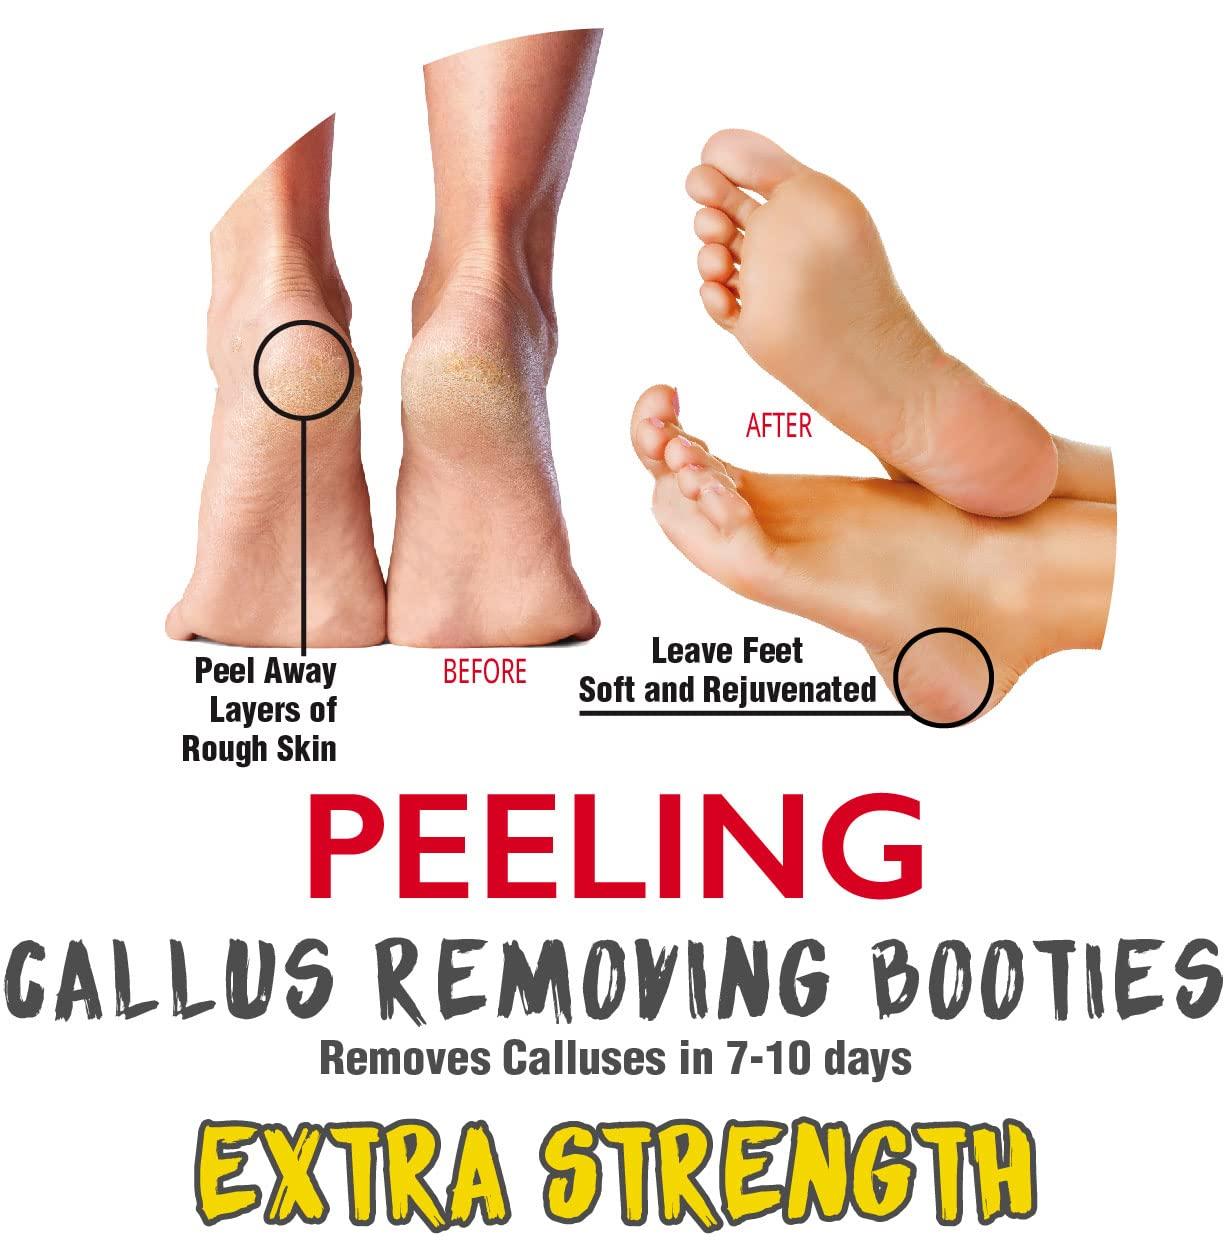 OEM 2 Pairs Exfoliating Best Effective Dead Skin Removing Foot